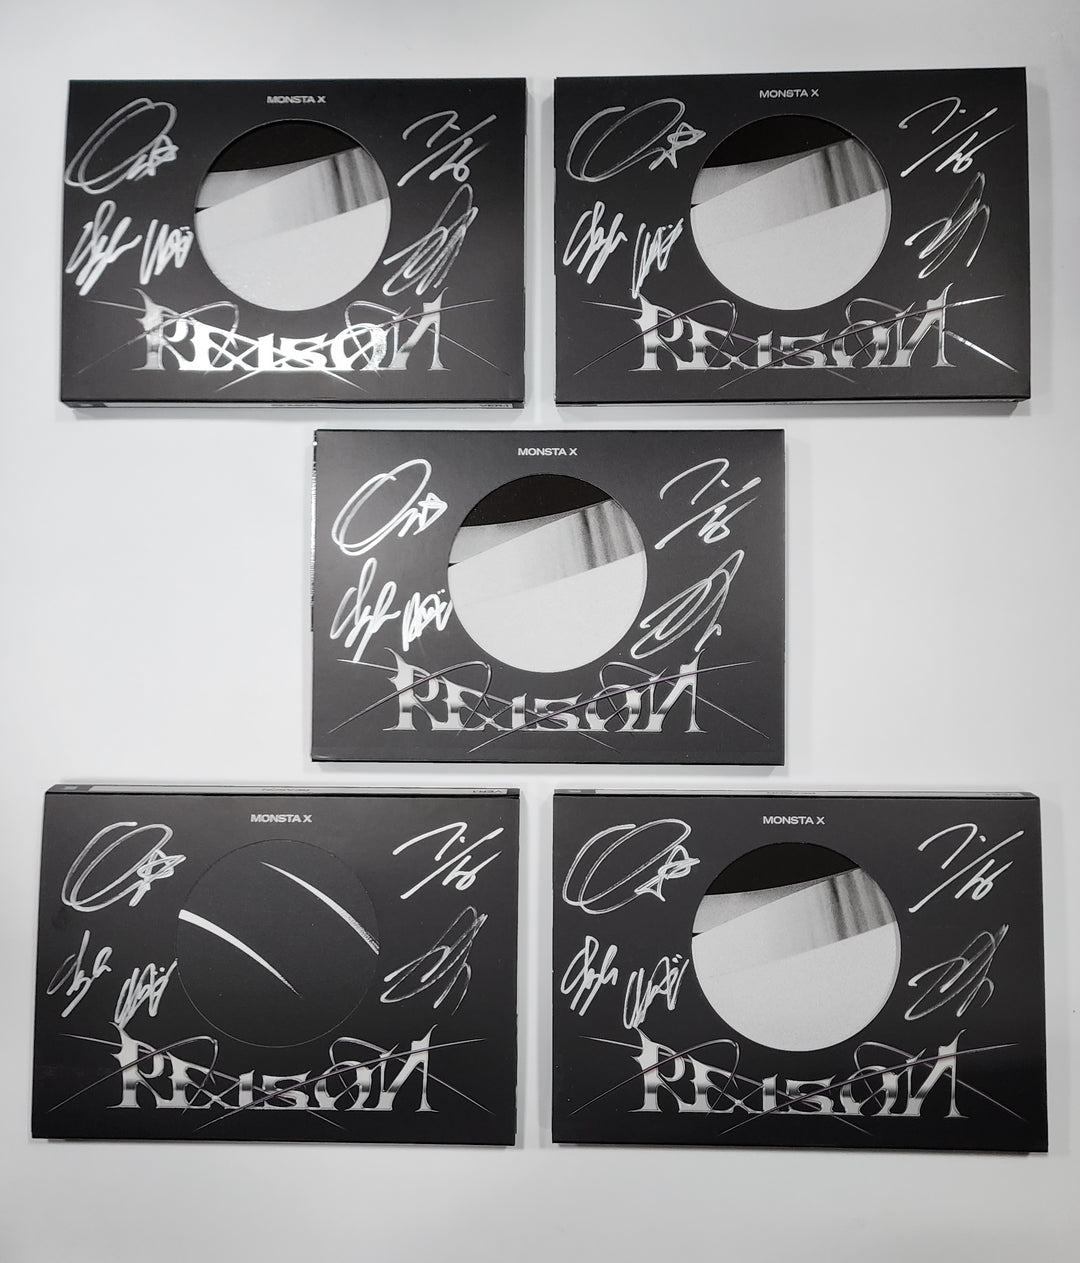 MONSTA X「REASON」 - 直筆サイン入りプロモアルバム